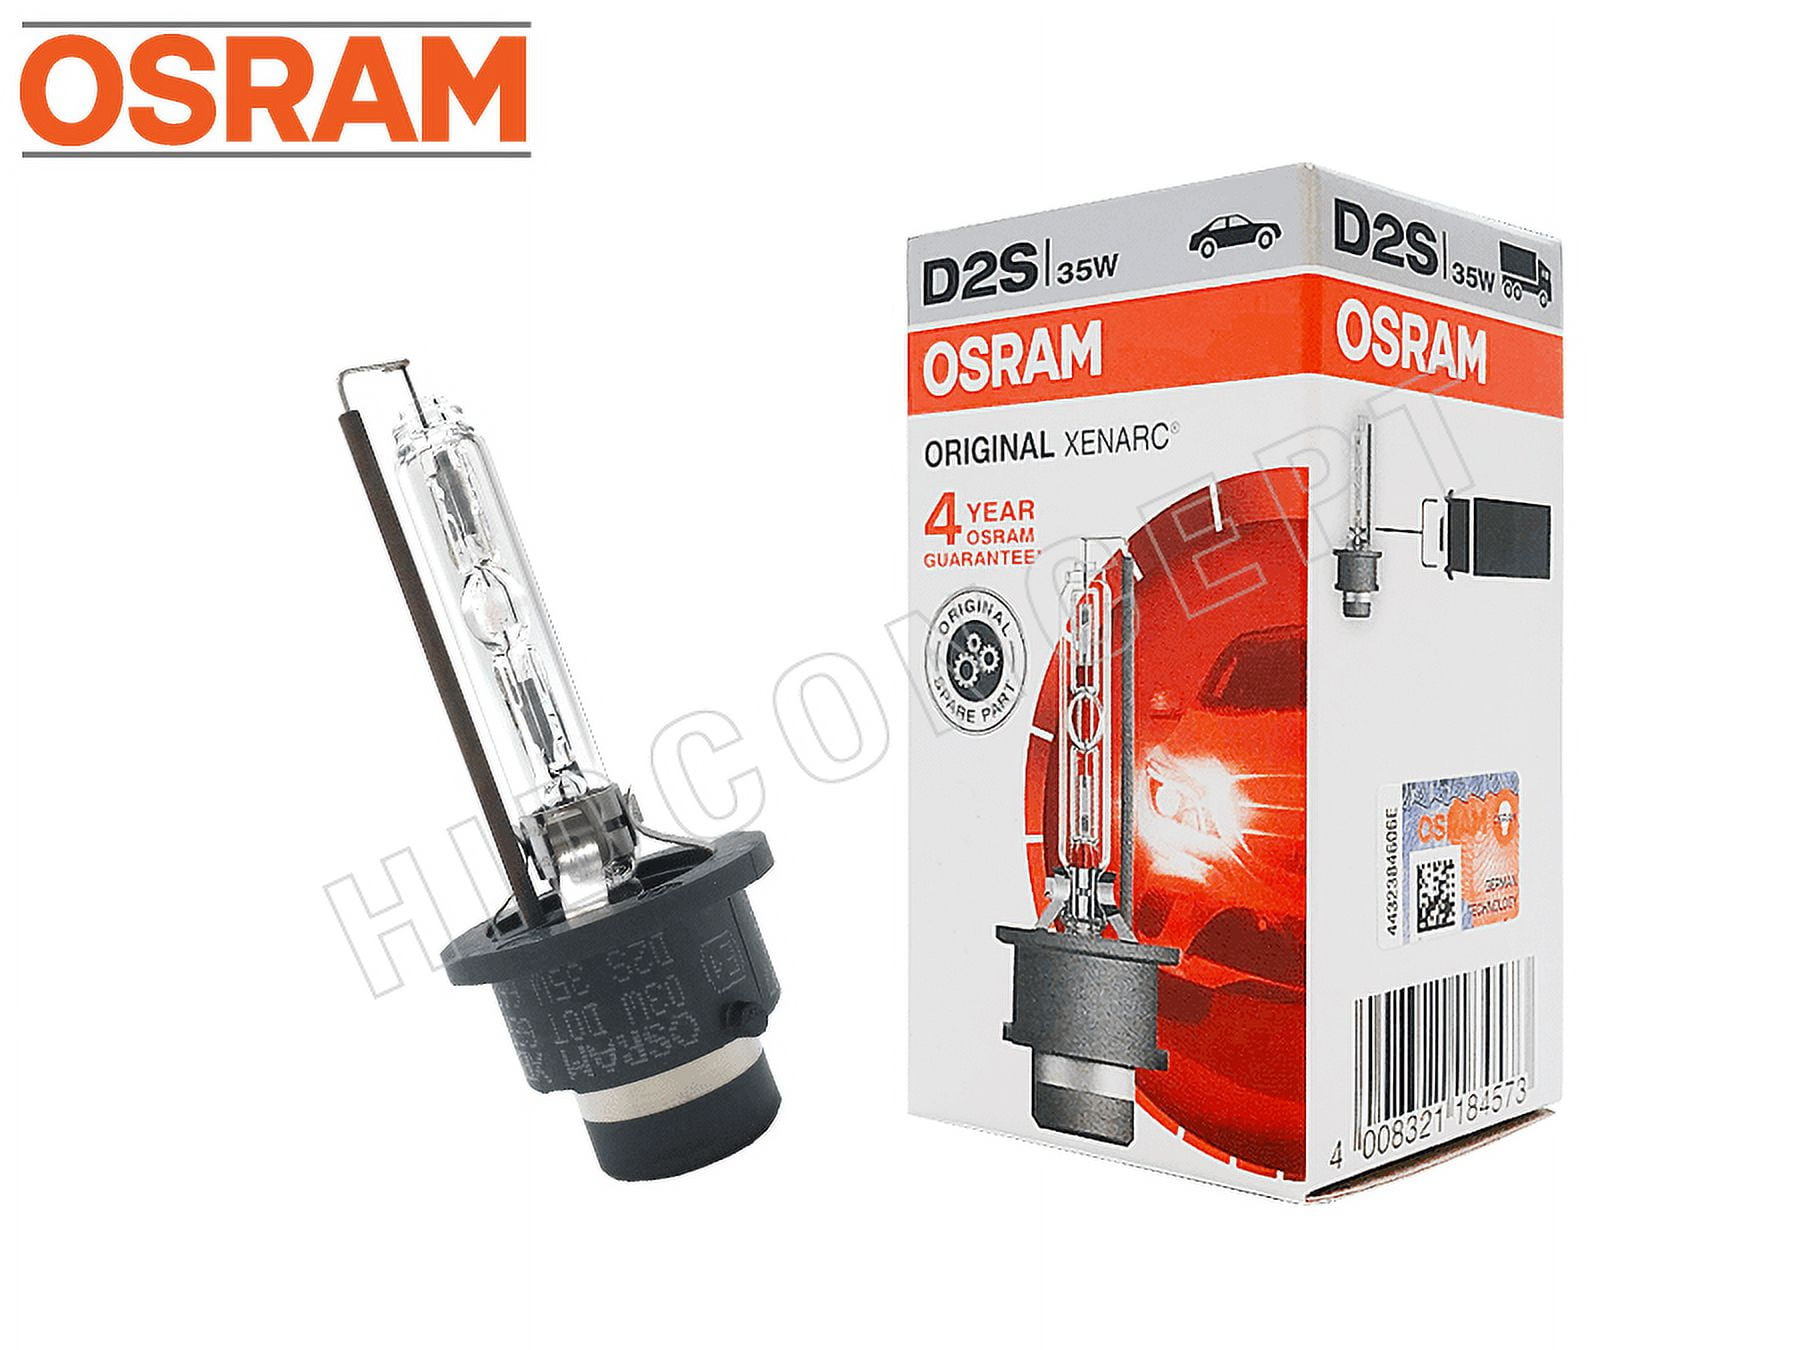 D2S: 4300K HID Bulbs Osram Xenarc 66240 Classic